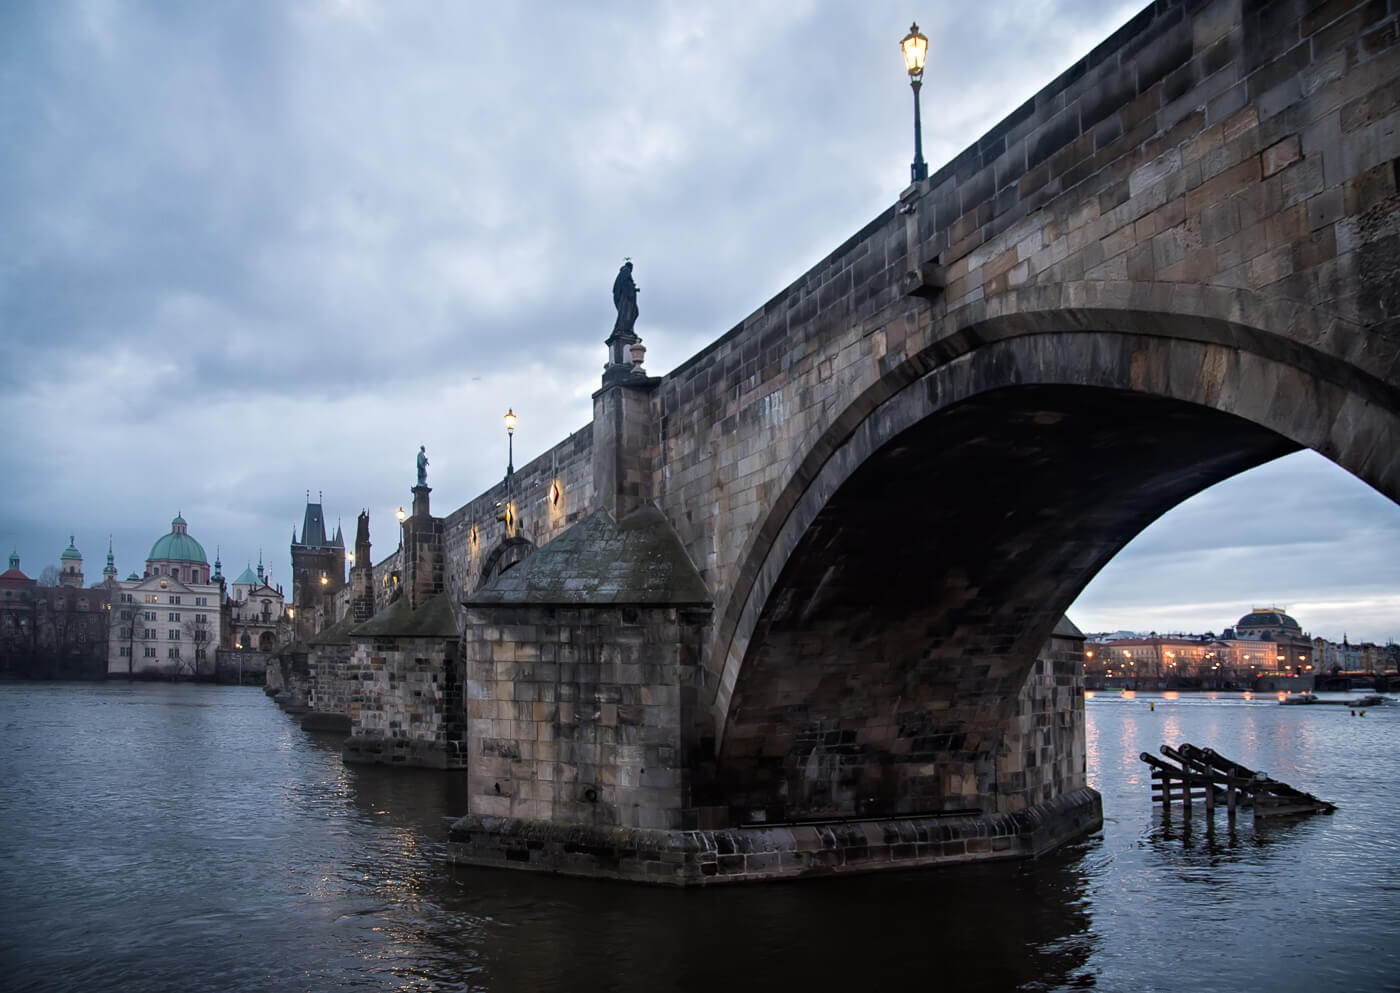 Charles Bridge over the Vltava river, Prague - Photograph by Zdenek Sindelar / CuriousZed